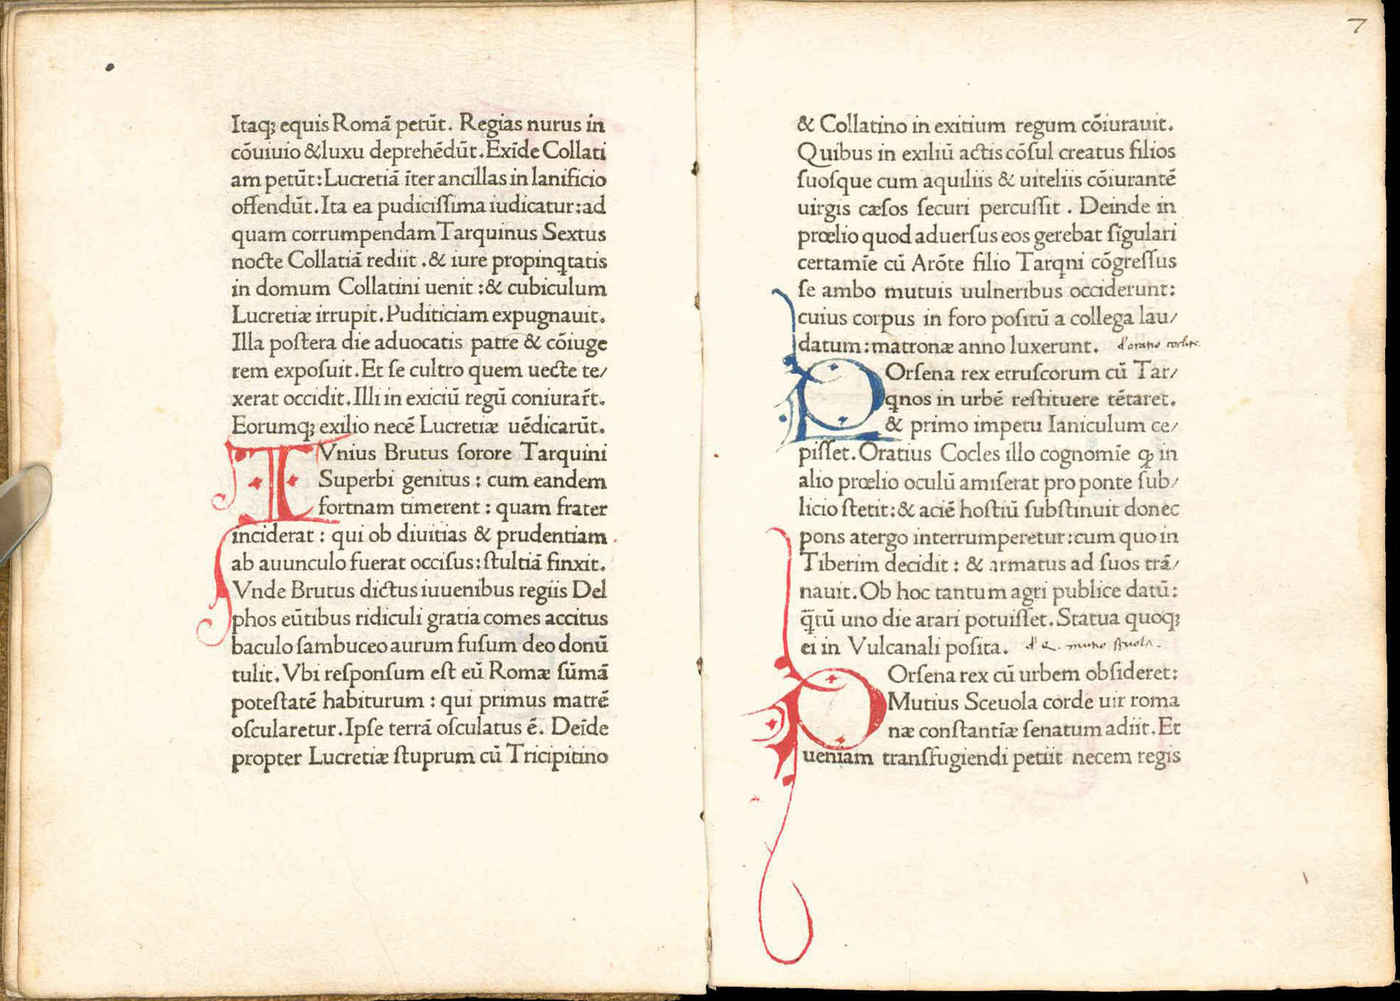 De viris illustribus page, printed 1474 by Nicolas Jenson; rubricated Lombardic capitals (initials), both red & blue